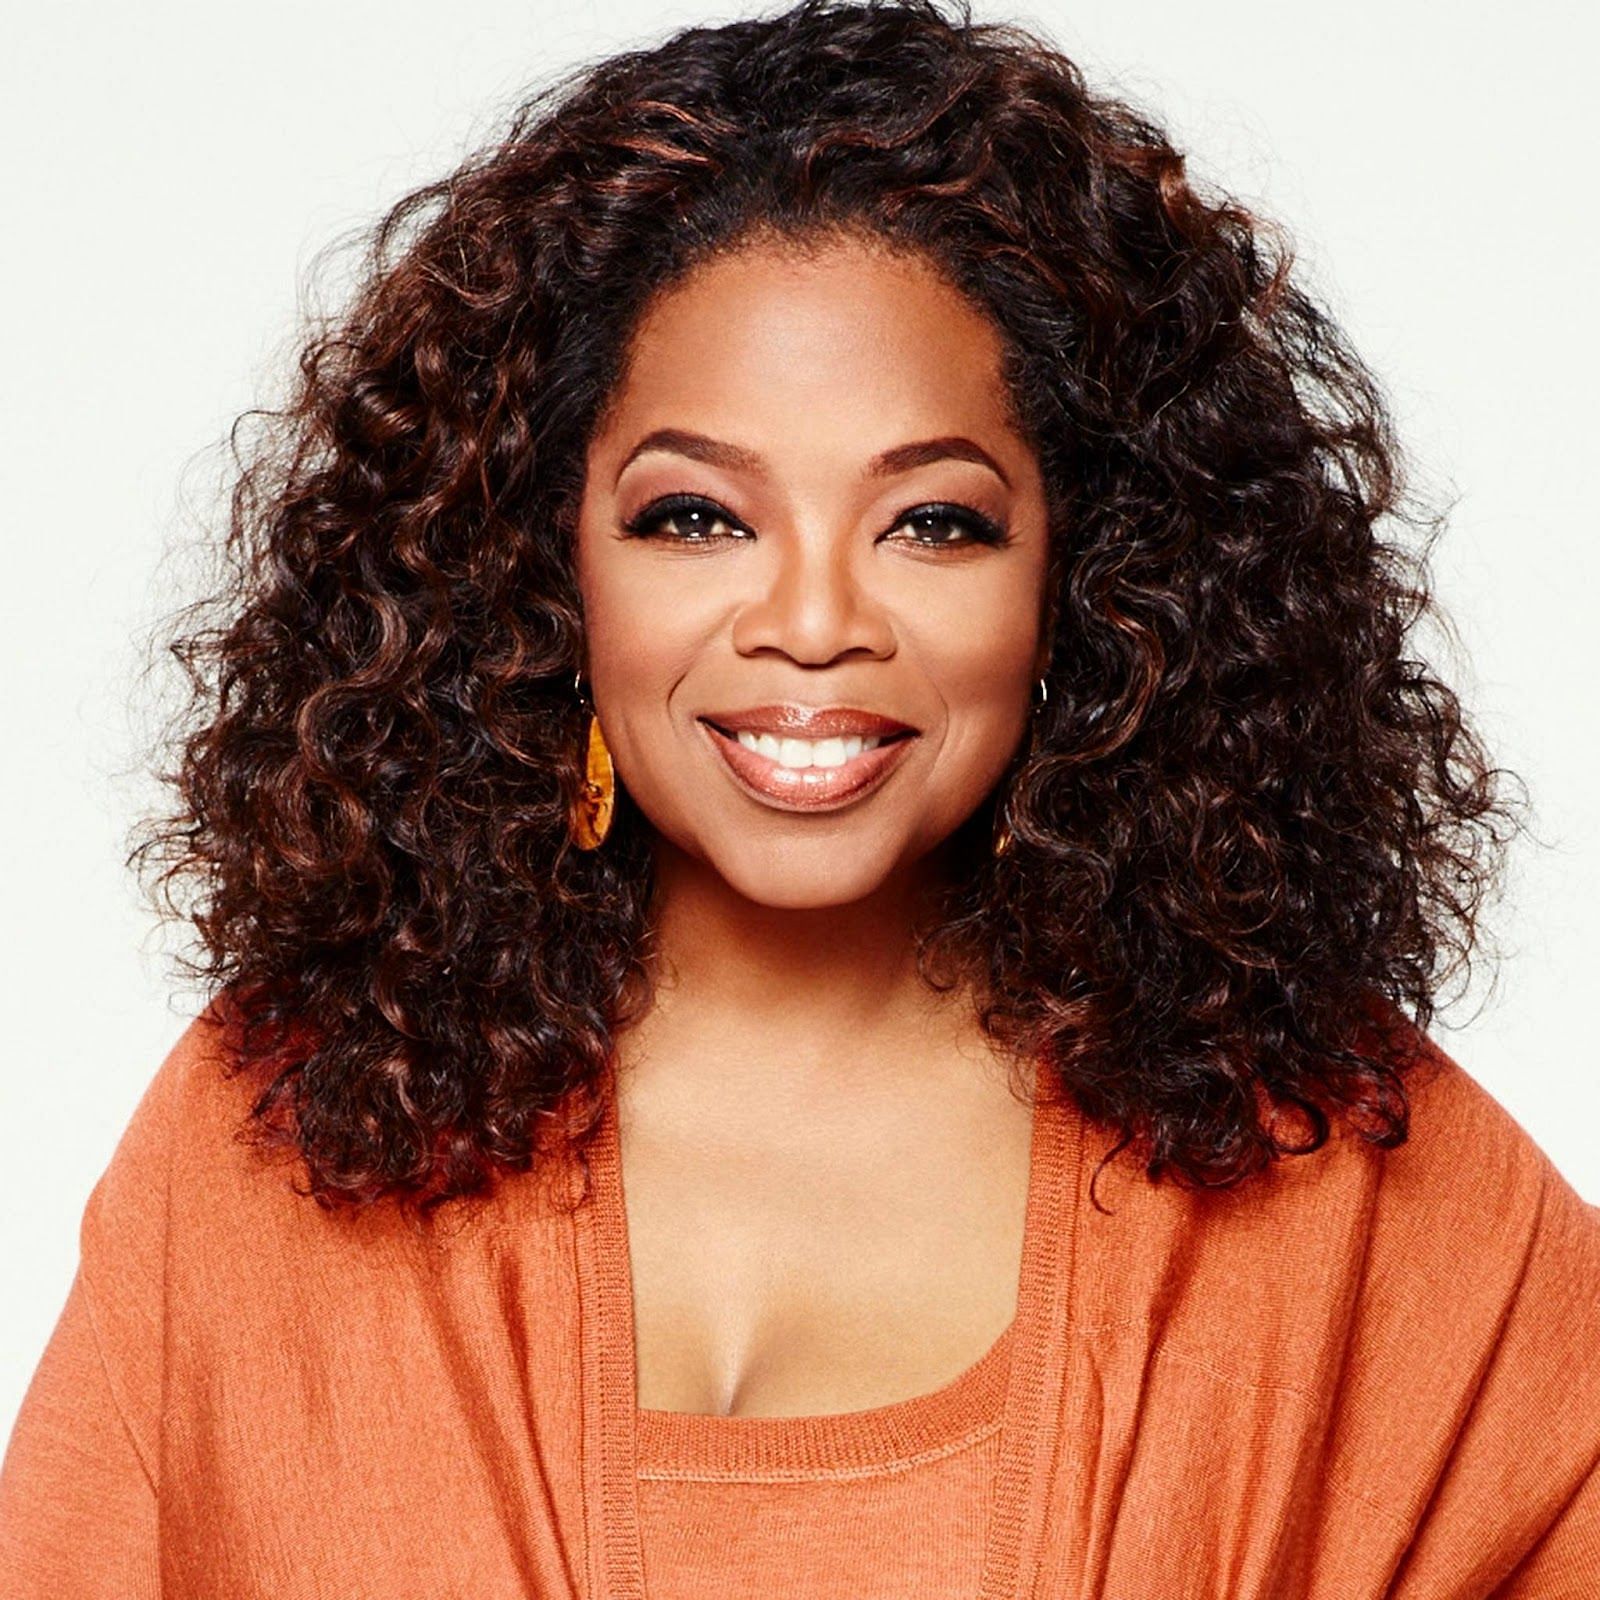 How much is Oprah Winfrey’s Net Worth as of 2023?